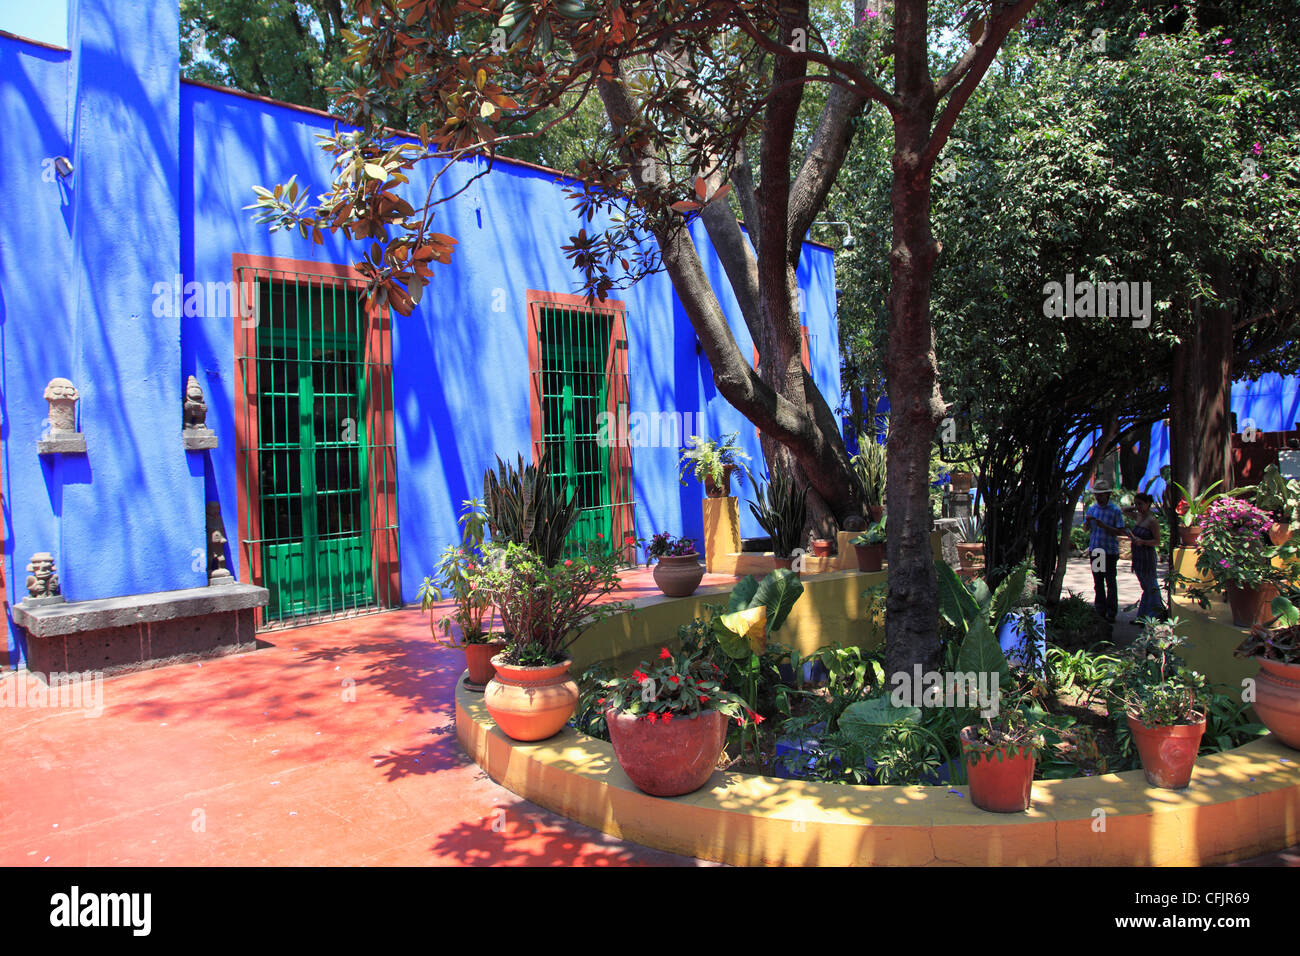 Frida Kahlo museum, Coyoacan, Mexico City, Mexico, North America Stock Photo